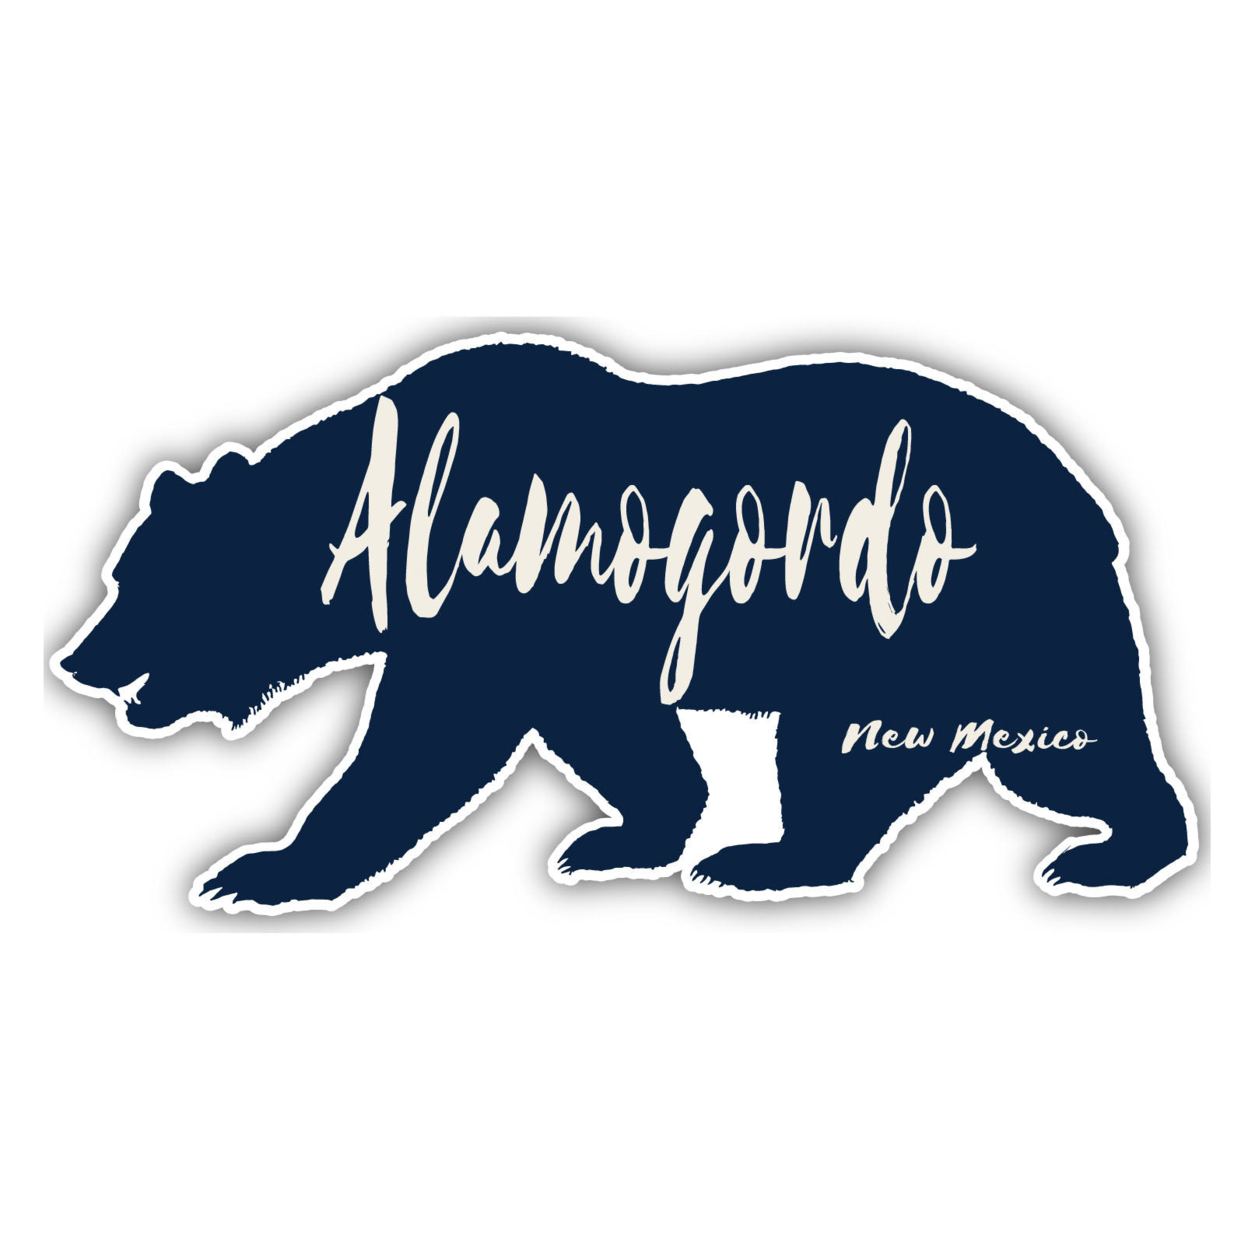 Alamogordo New Mexico Souvenir Decorative Stickers (Choose Theme And Size) - 4-Pack, 12-Inch, Bear